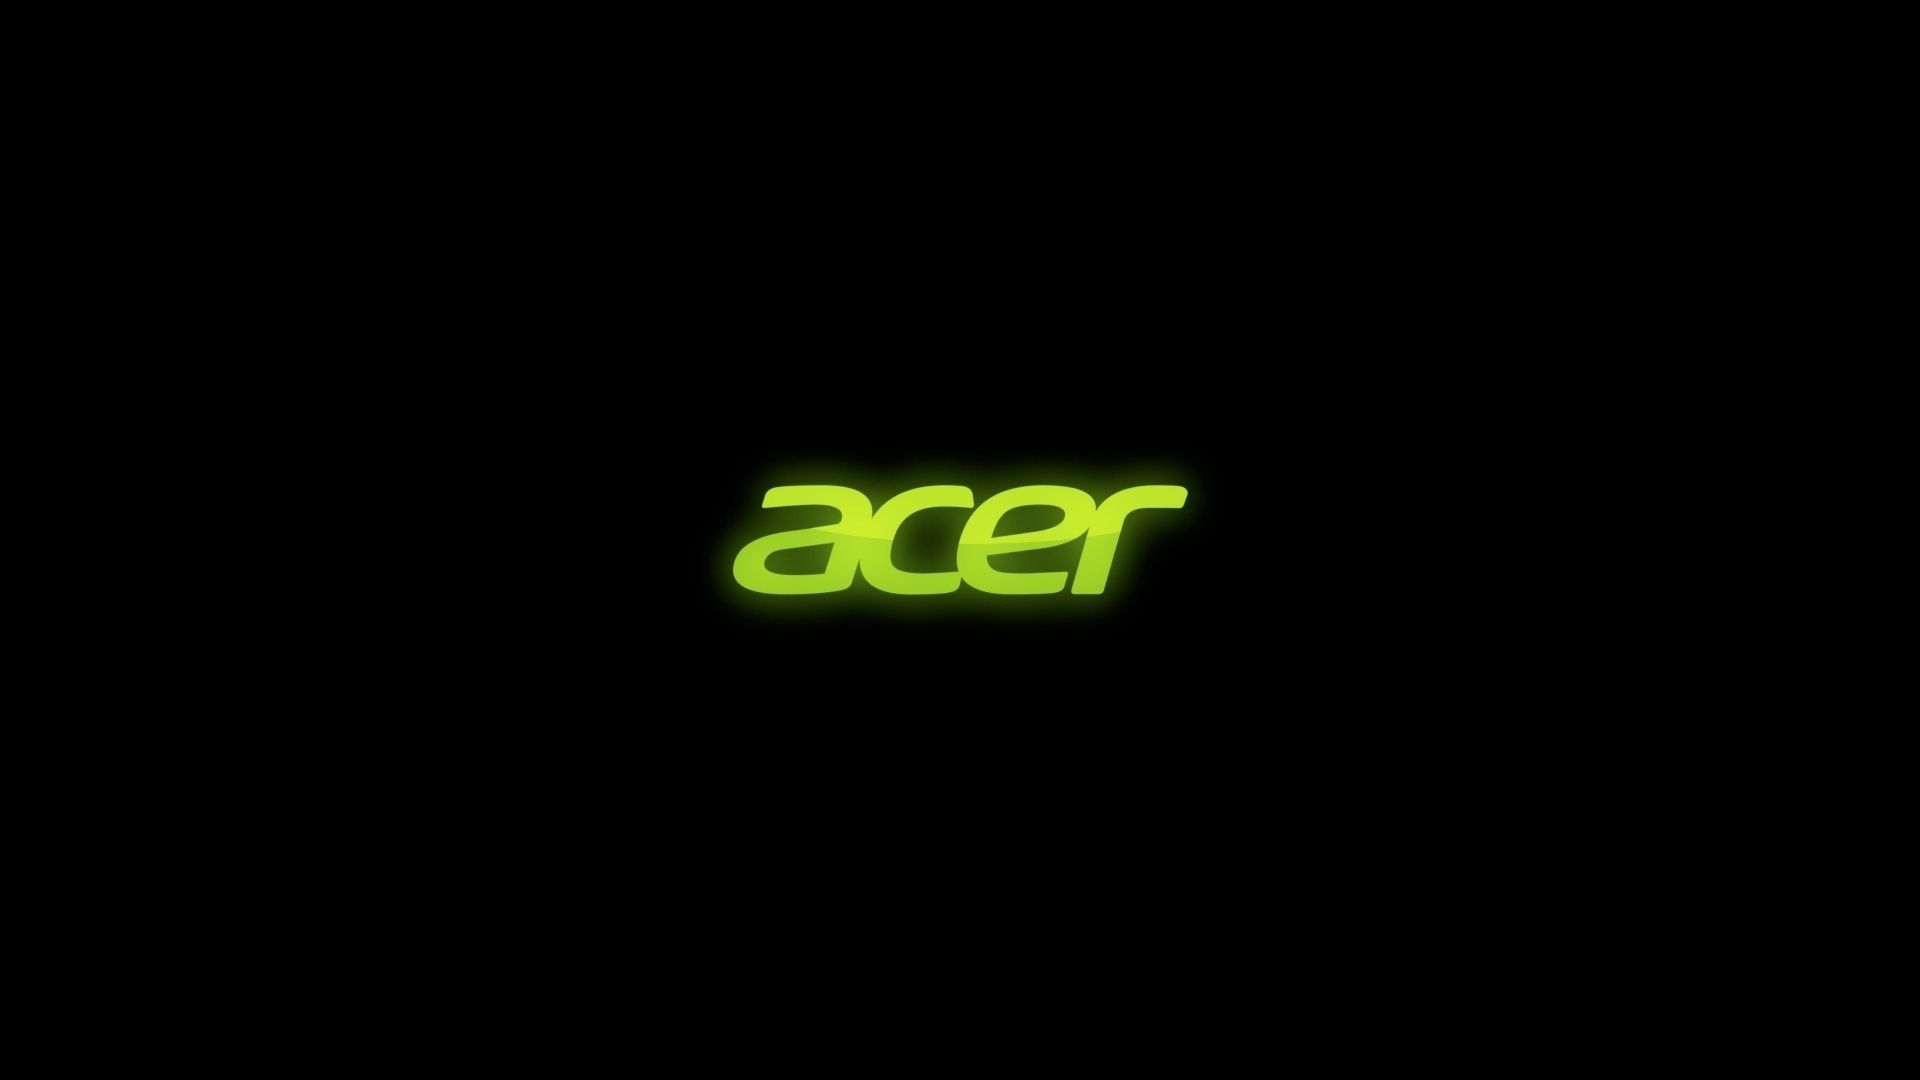 Full HD 1080p Acer Wallpapers HD, Desktop Backgrounds 1920x1080